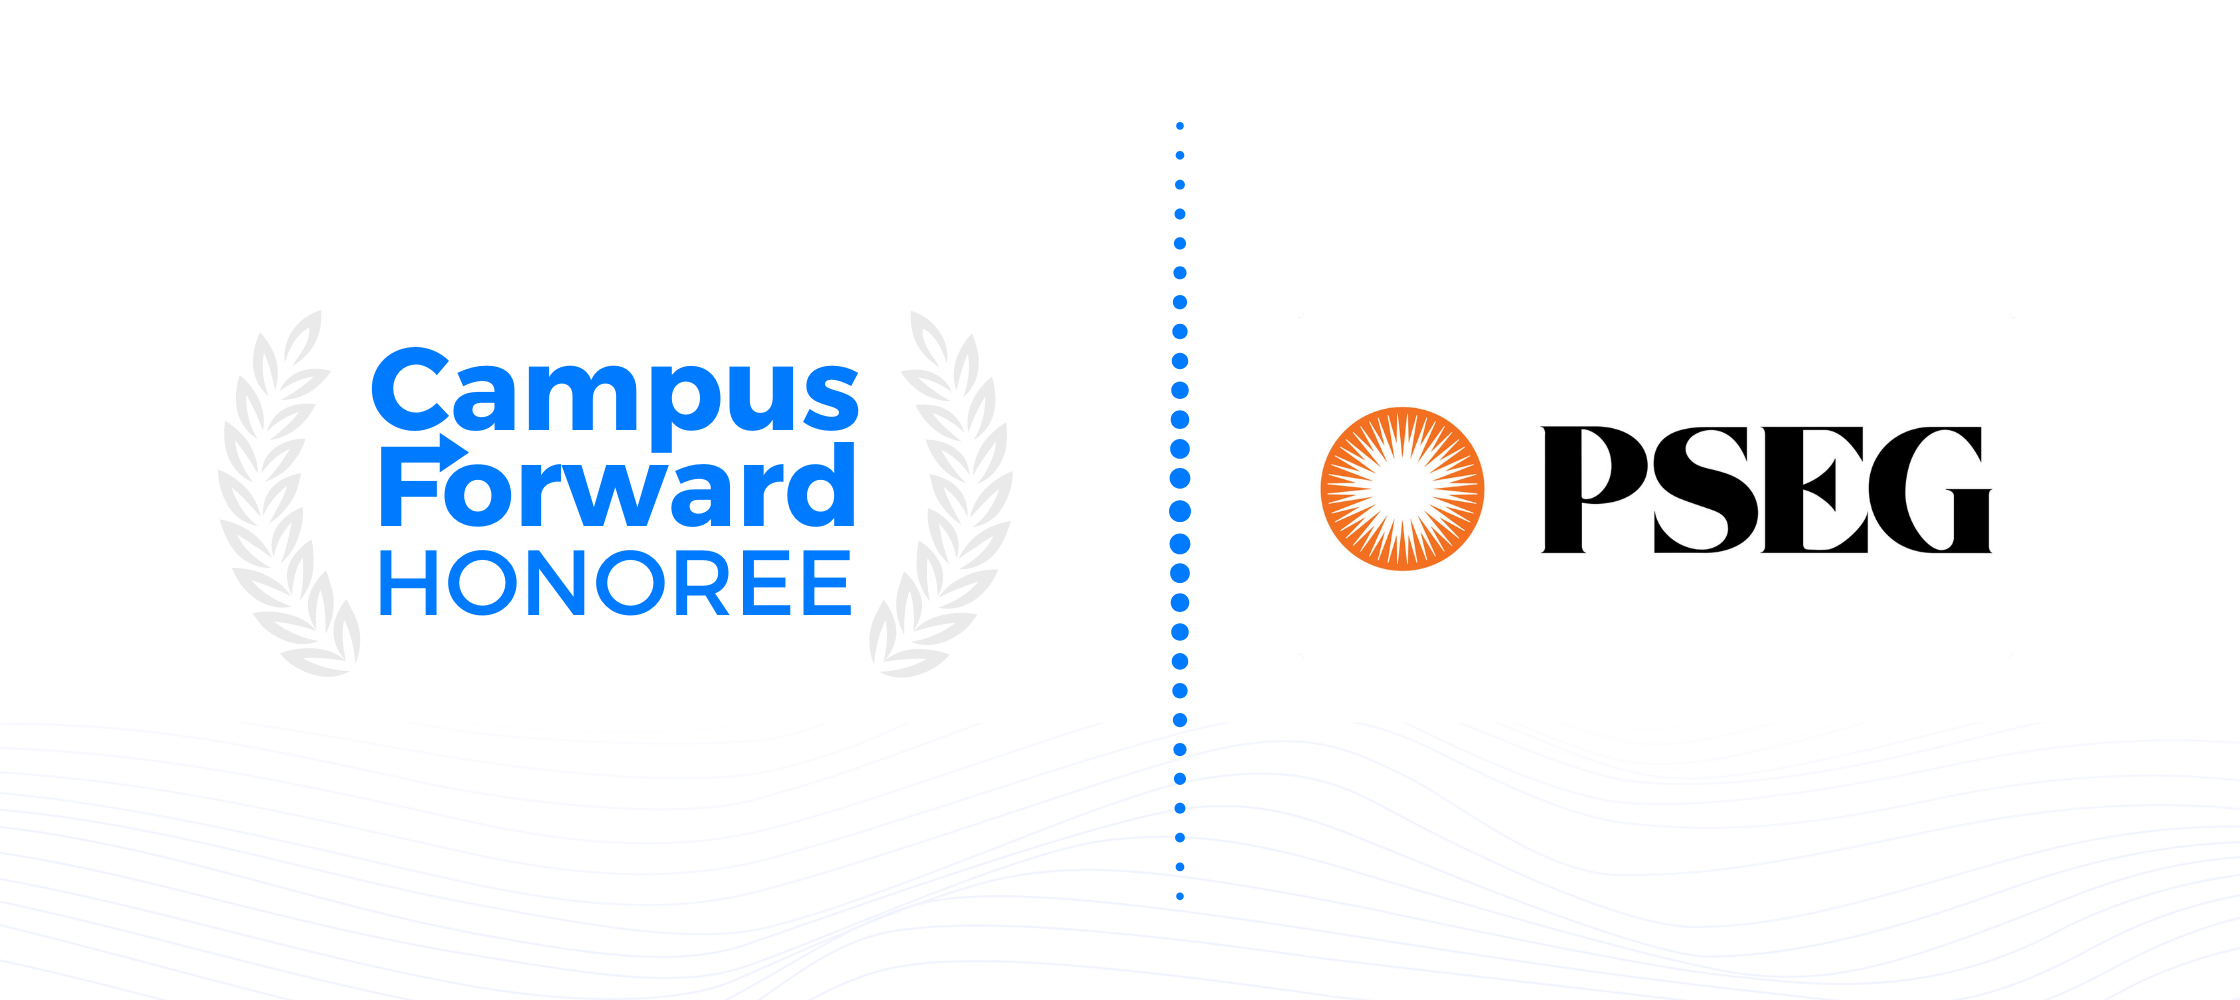 Campus Forward Honoree - PSEG